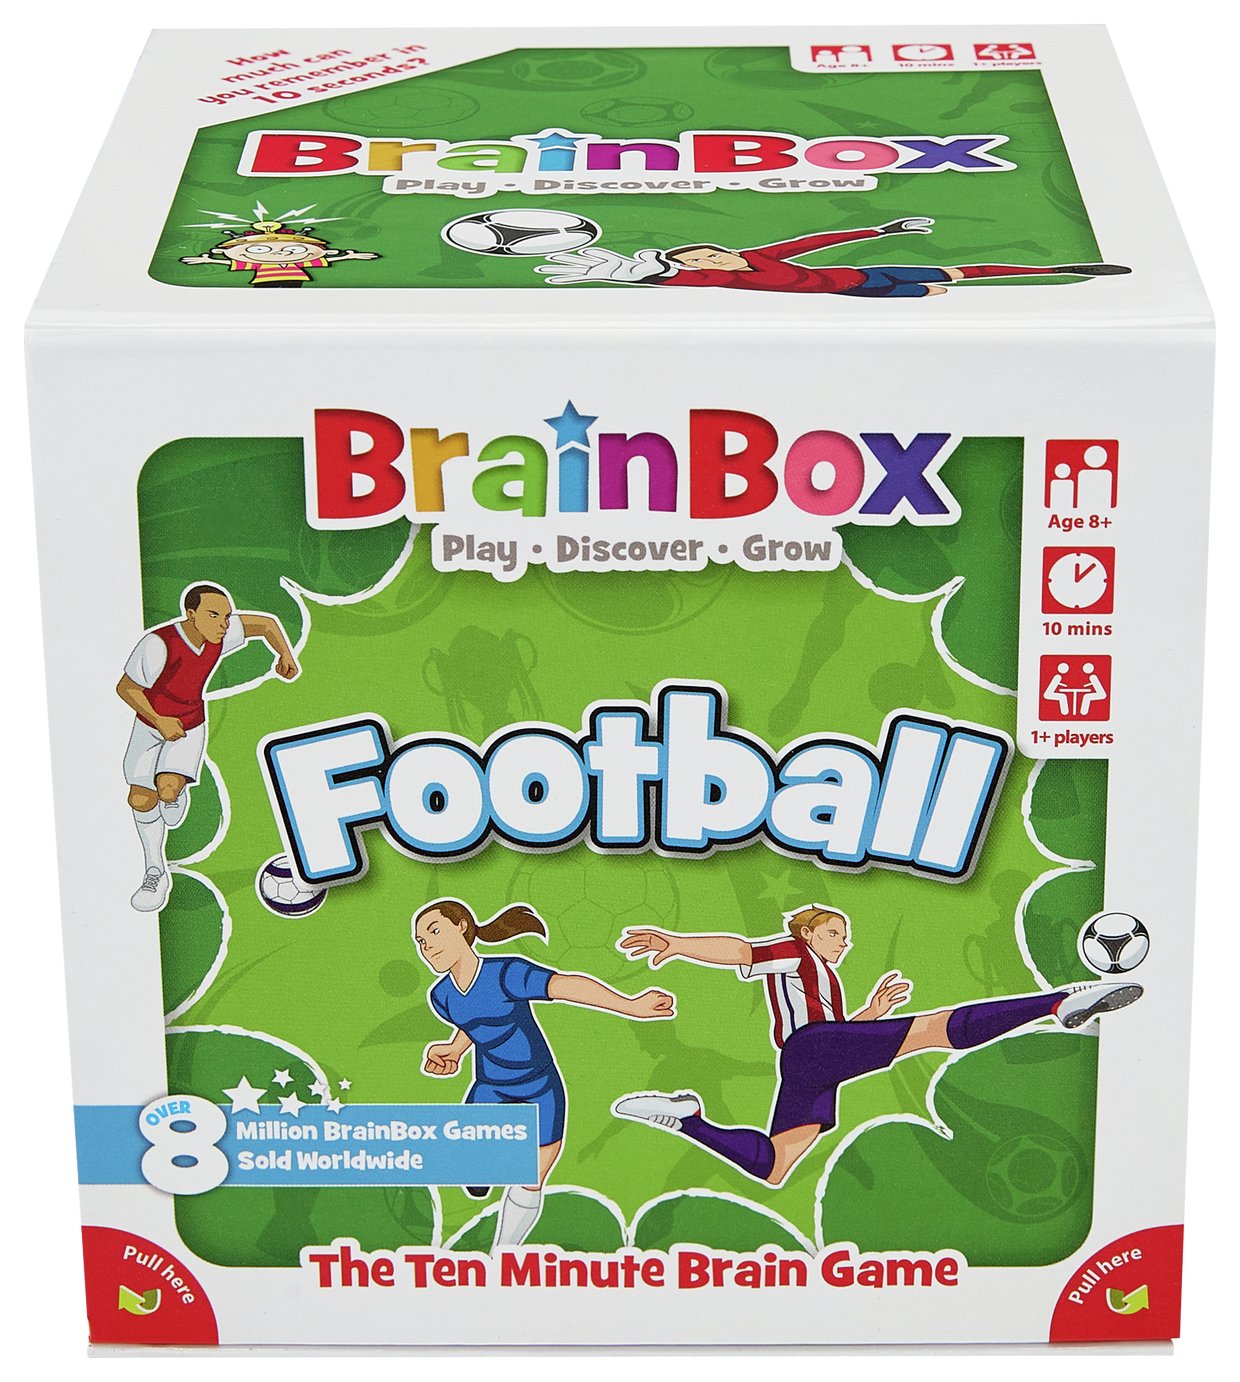 Brainbox Football Game